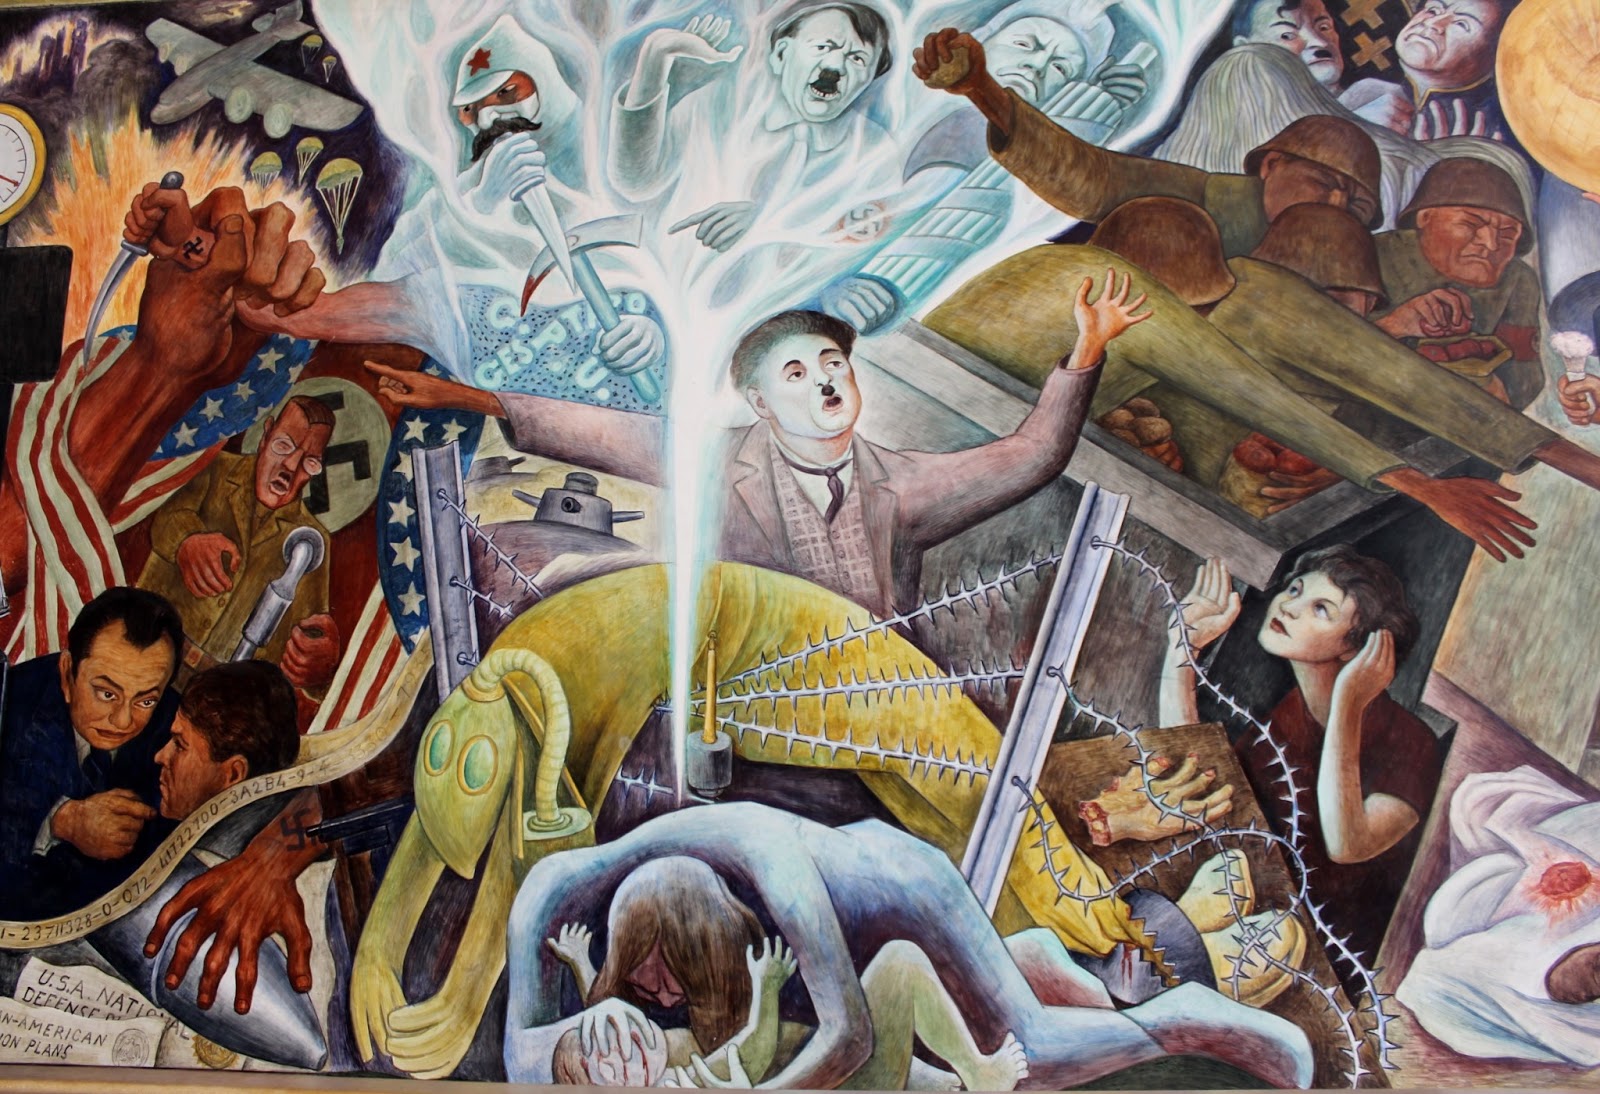 Bay Area Arts: Diego Rivera's "Pan American Unity" mural in San Francisco